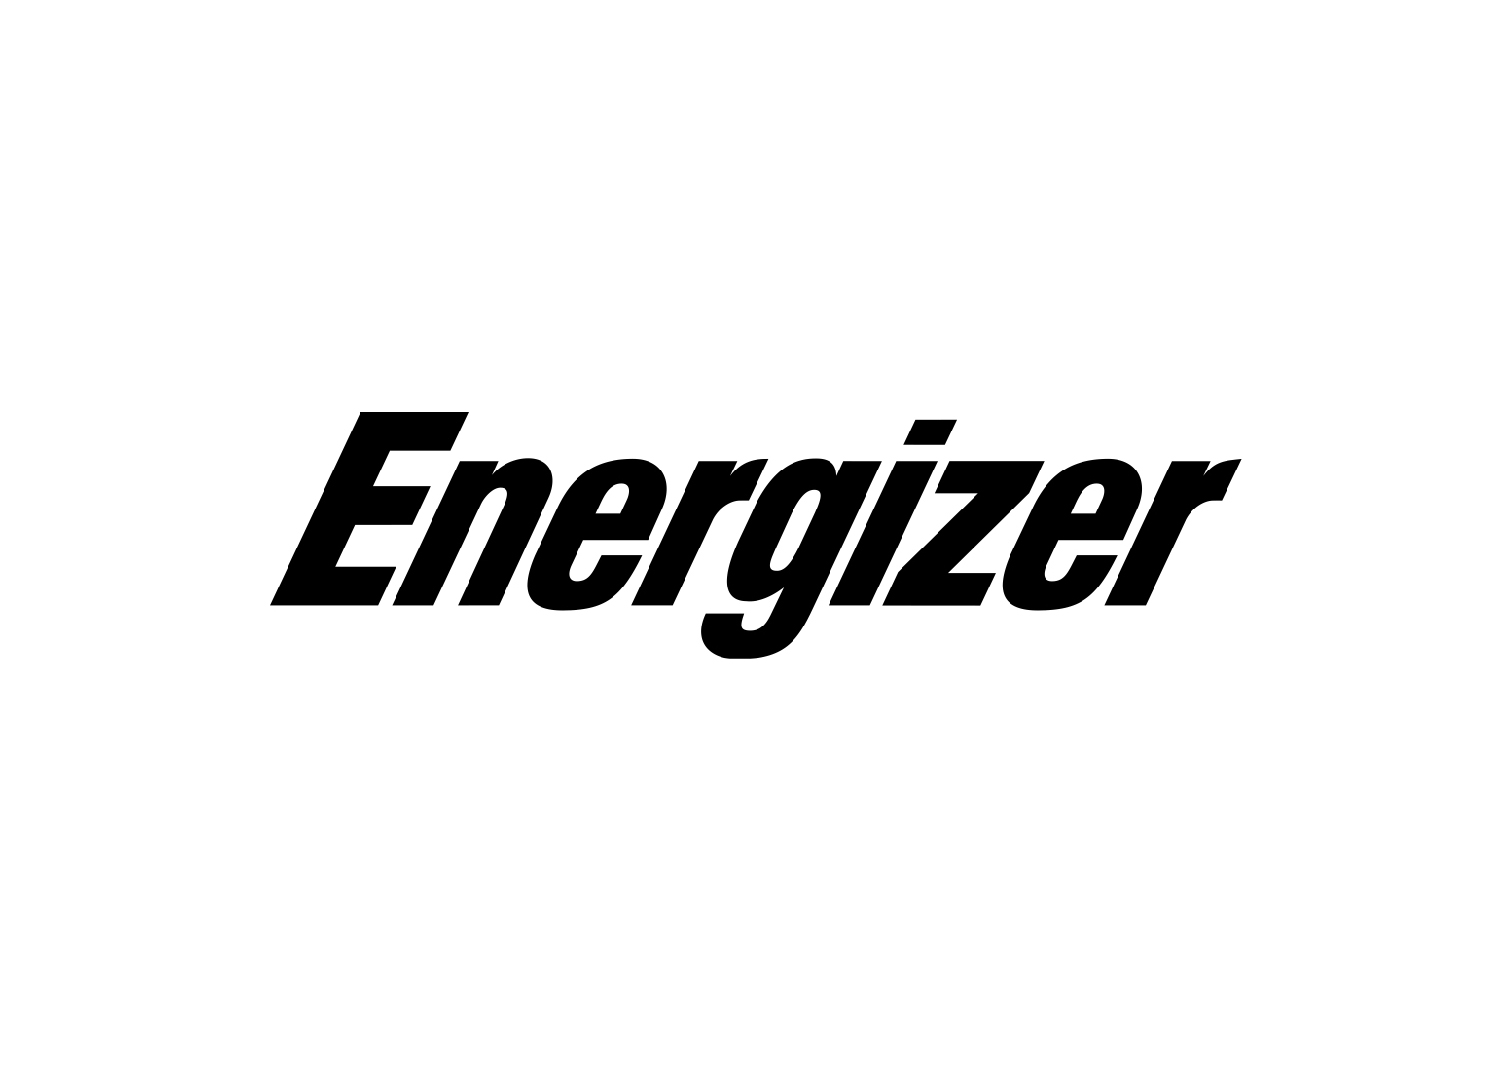 Energizer-01.jpg